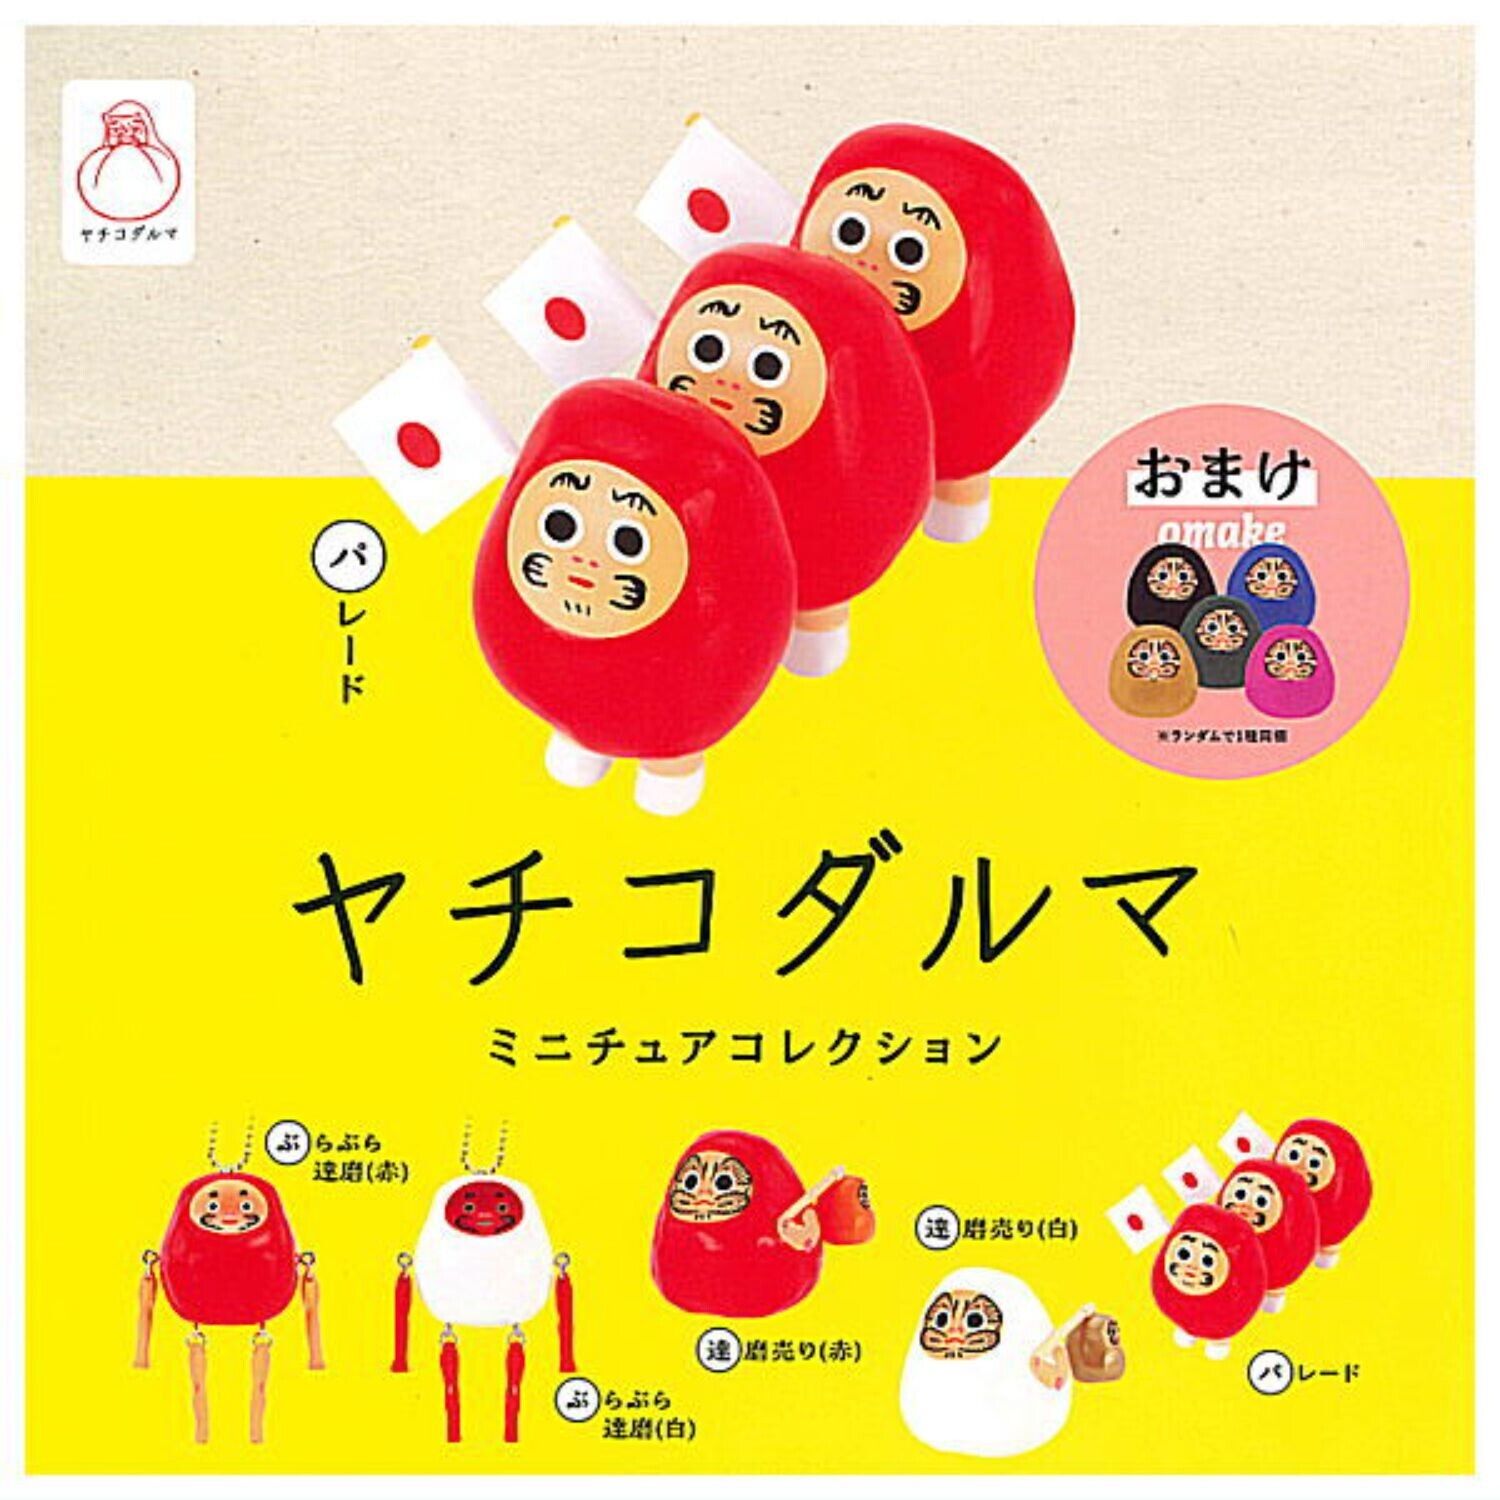 Yachiko Daruma Miniature Collection Mascot Capsule Toy 5 Types Comp Set Gacha